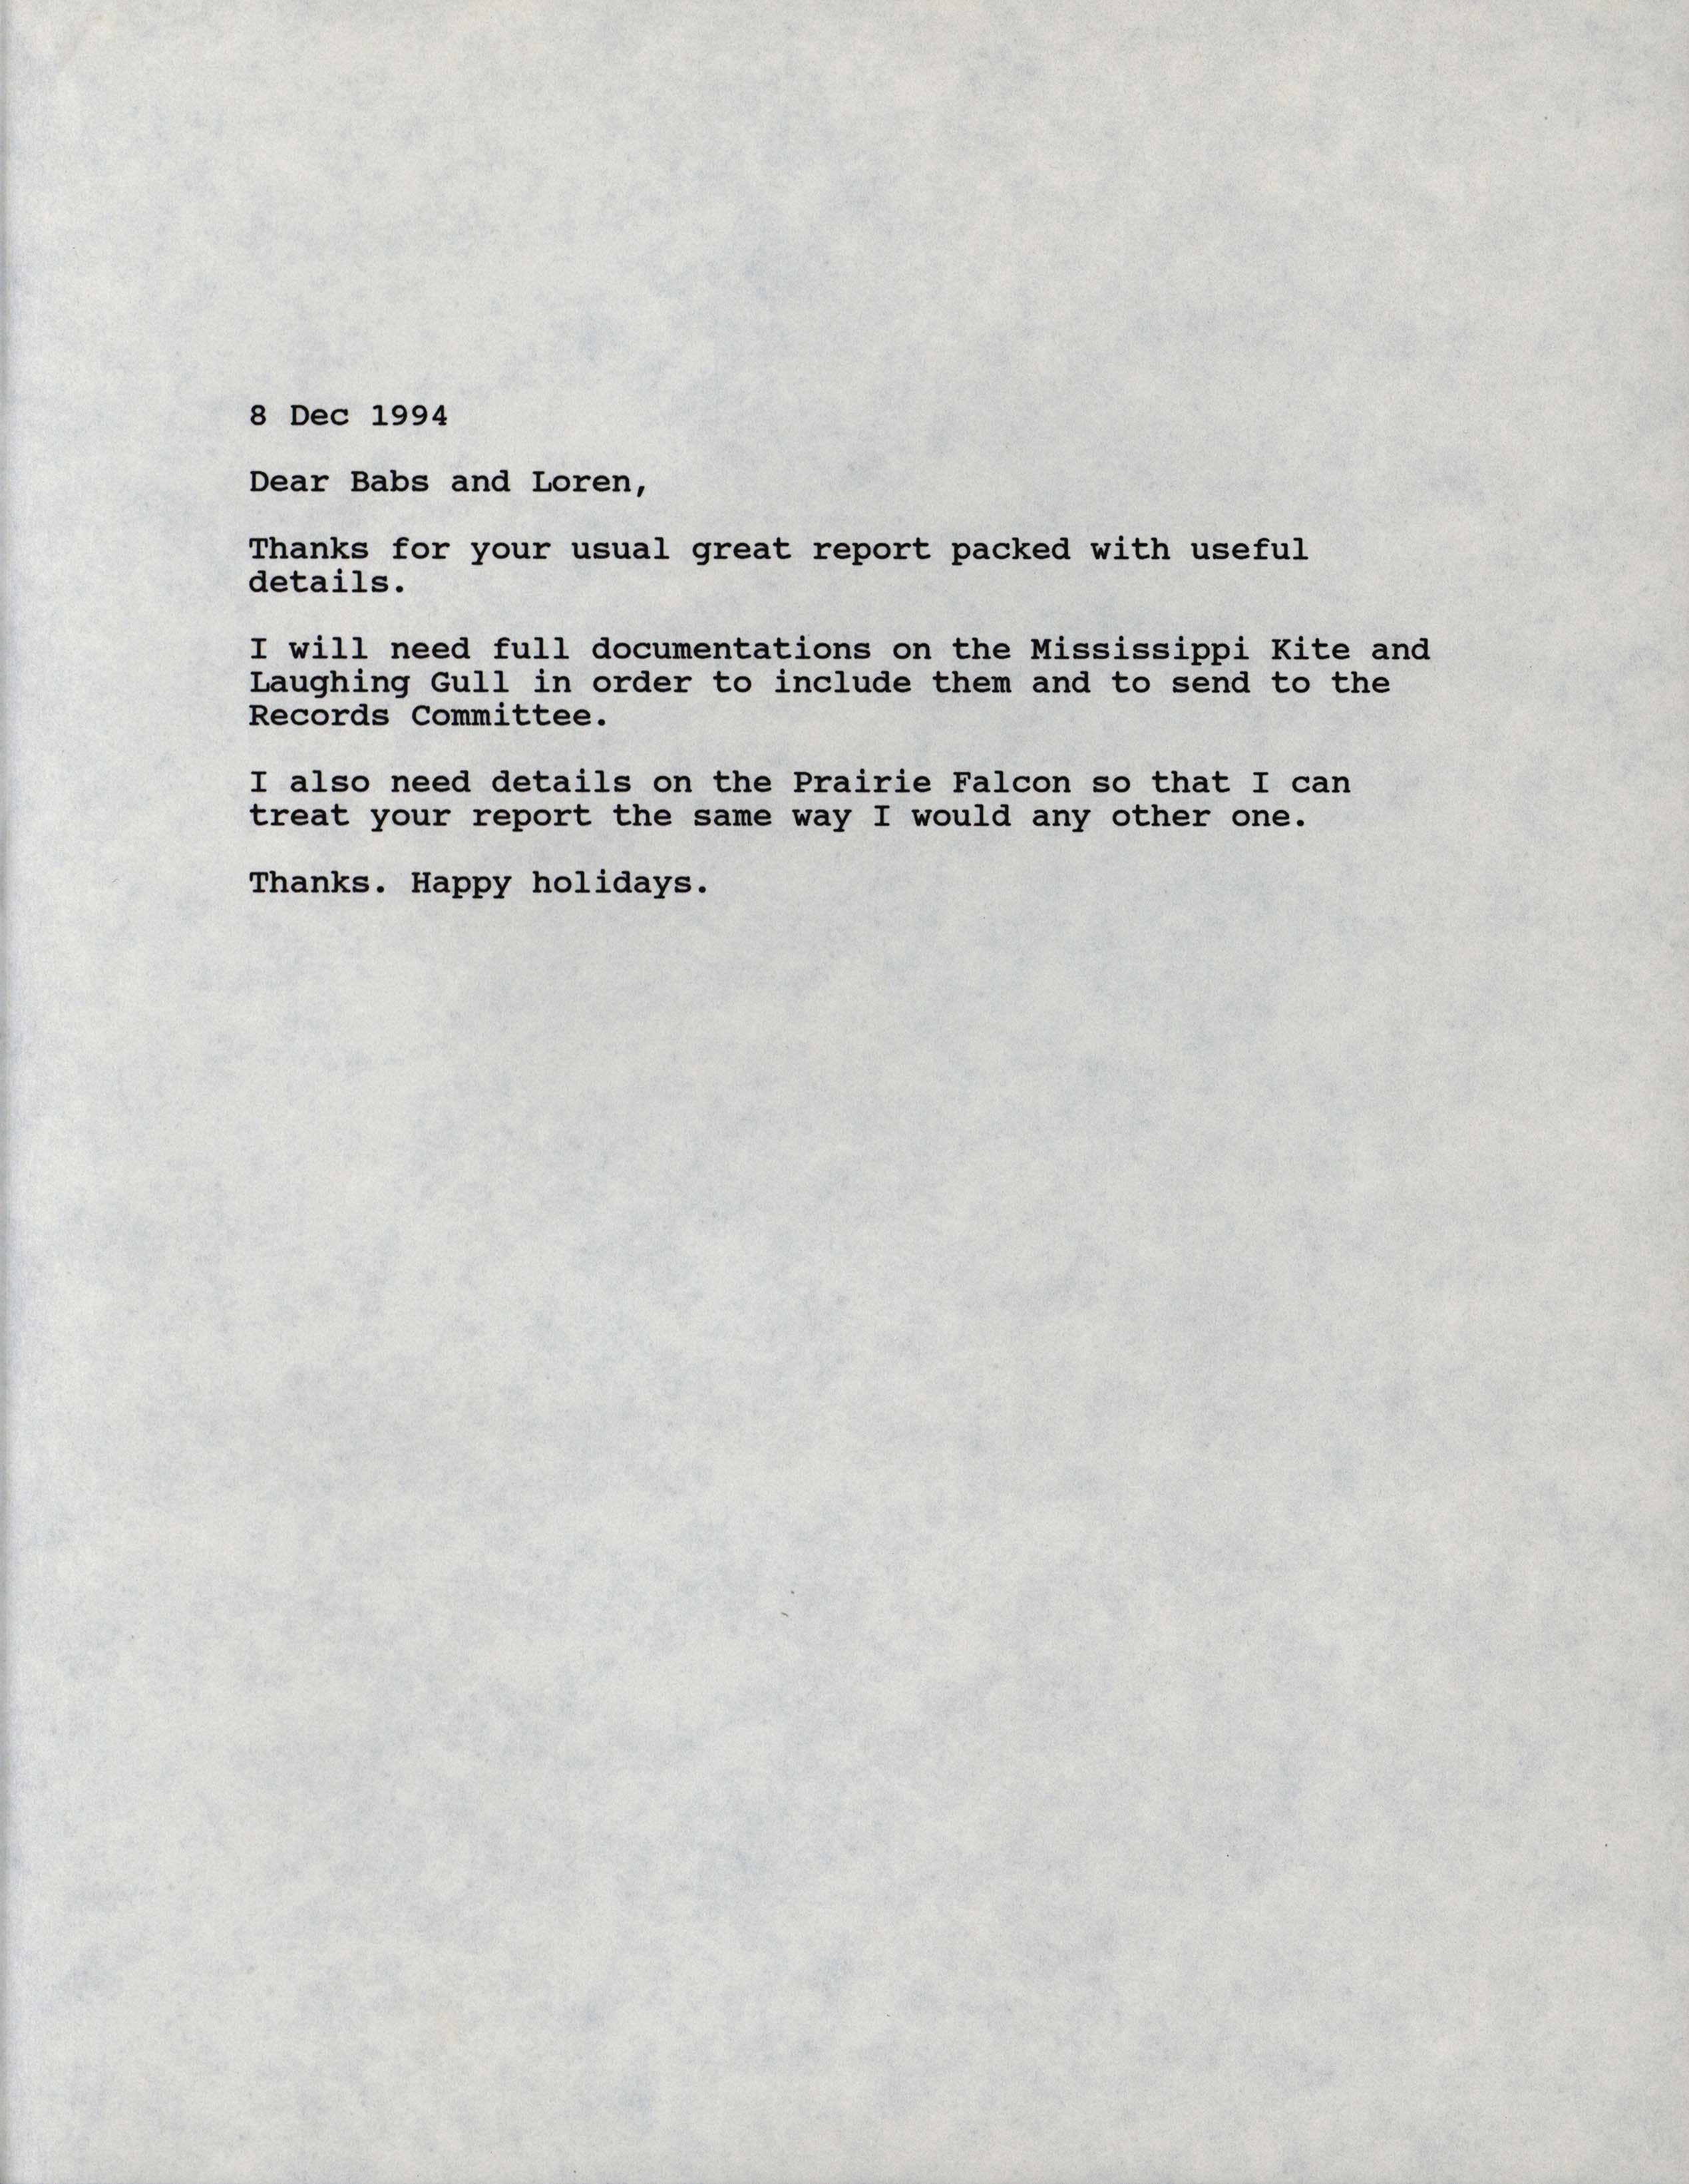 Thomas Kent letter to Babs and Loren Padelford regarding needed documentation, December 8, 1994